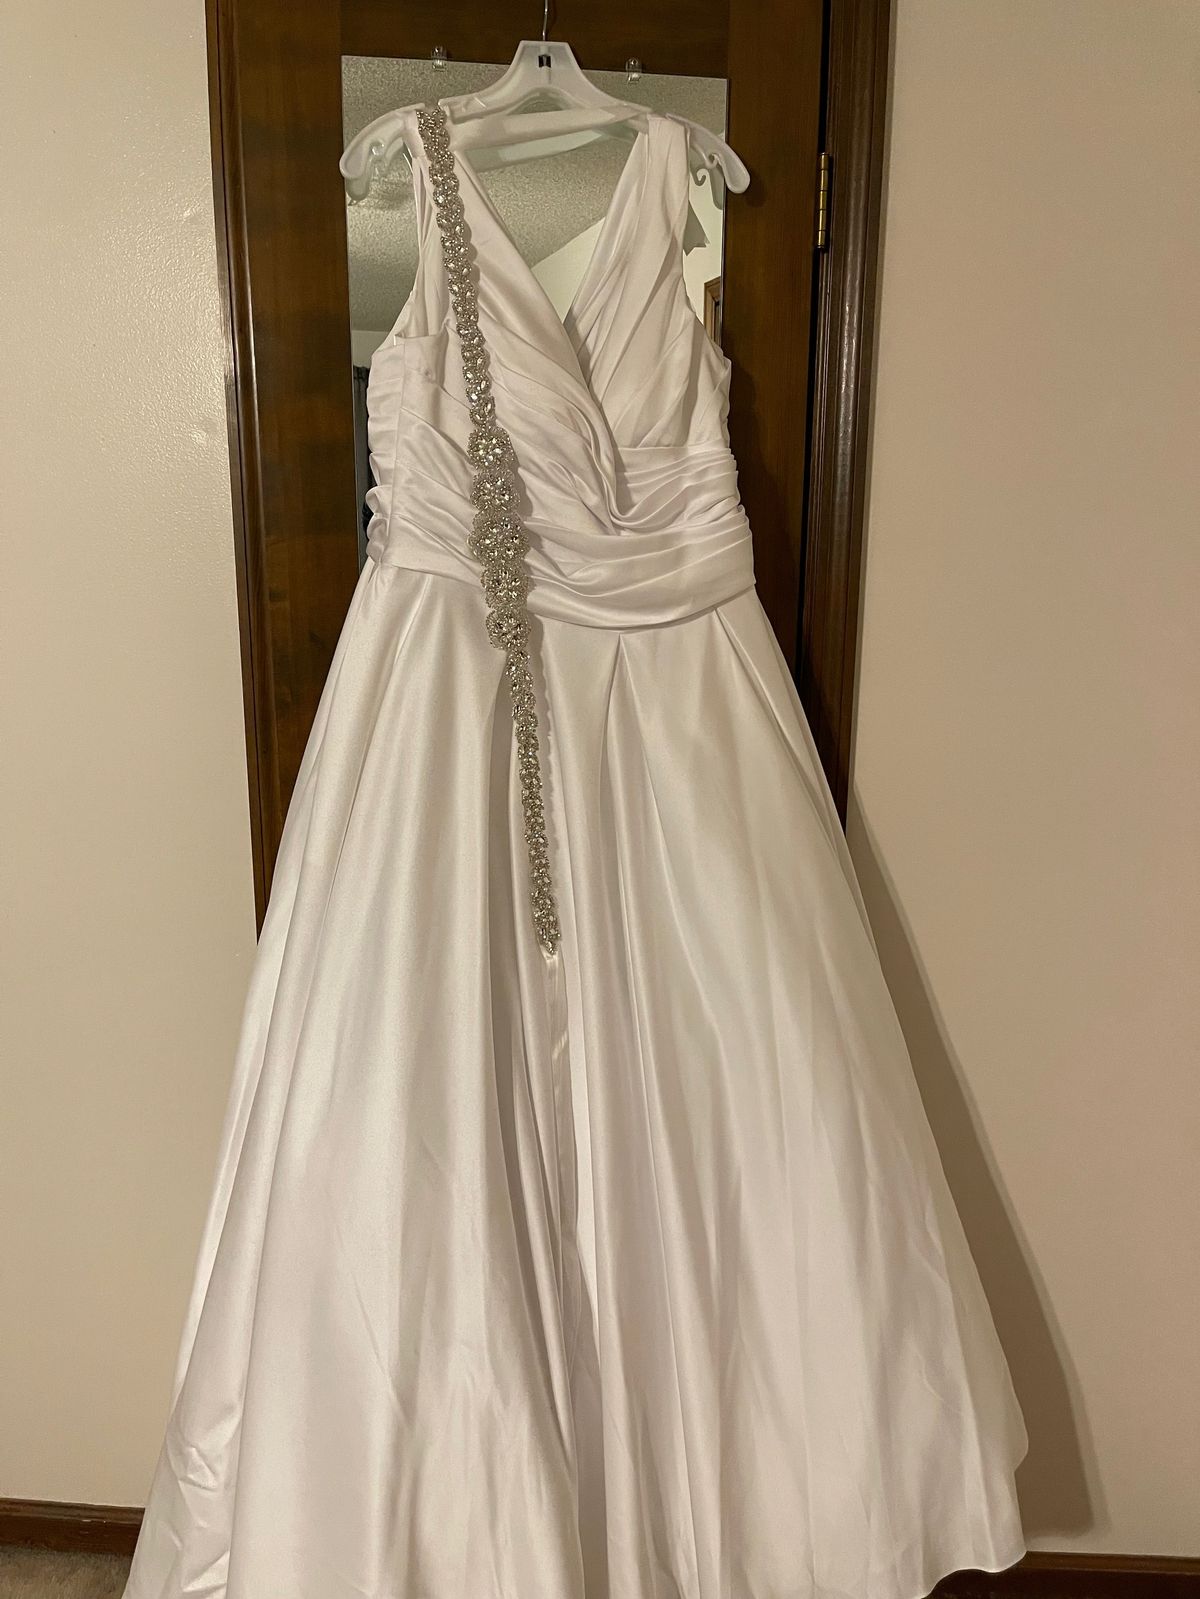 Venus Plus Size 22 Wedding White A-line Dress on Queenly